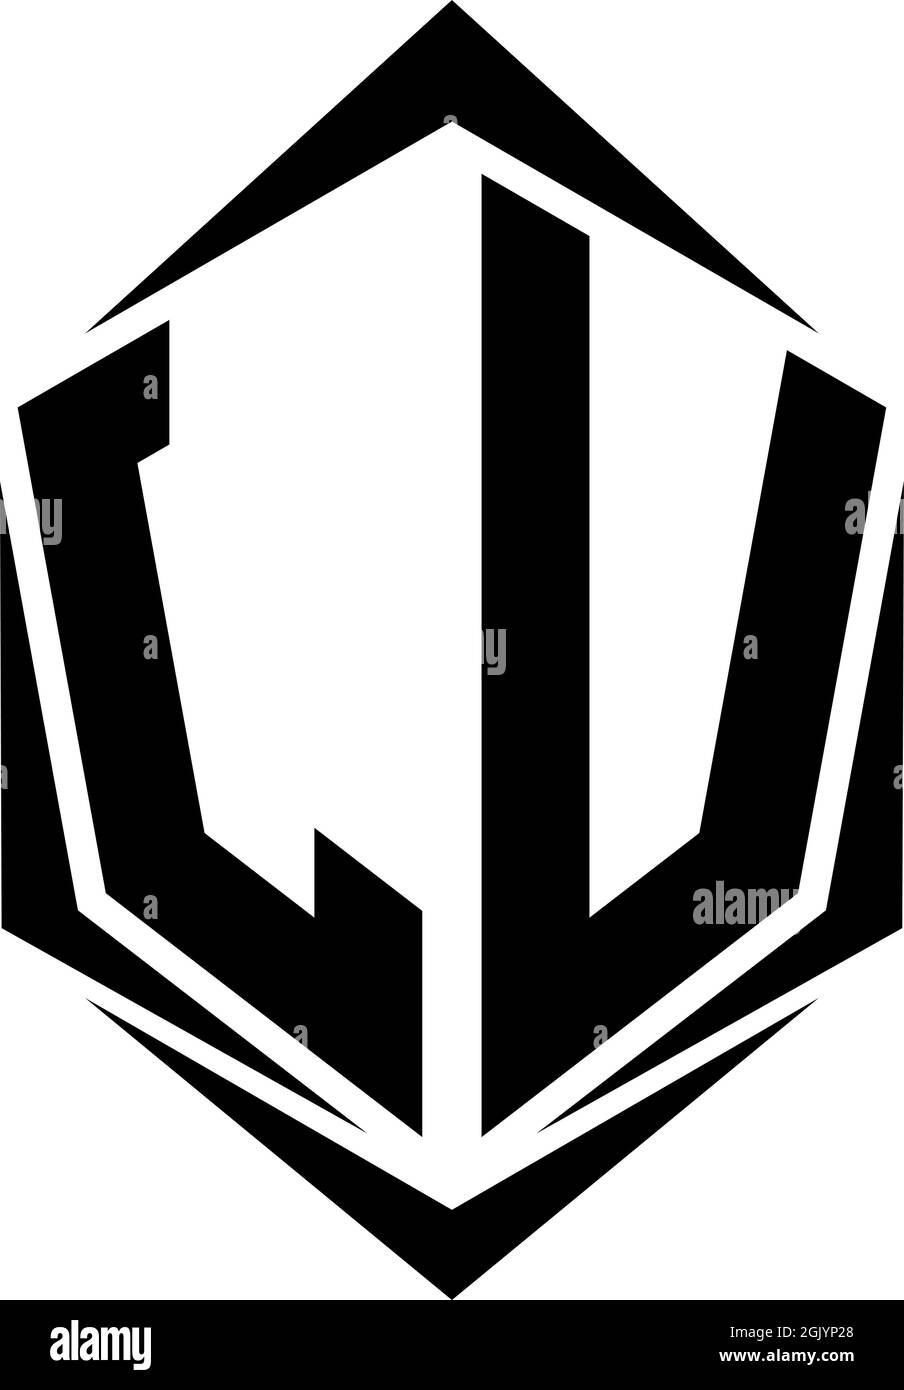 Initial JV logo design with Shield style, Logo business branding. Stock Vector